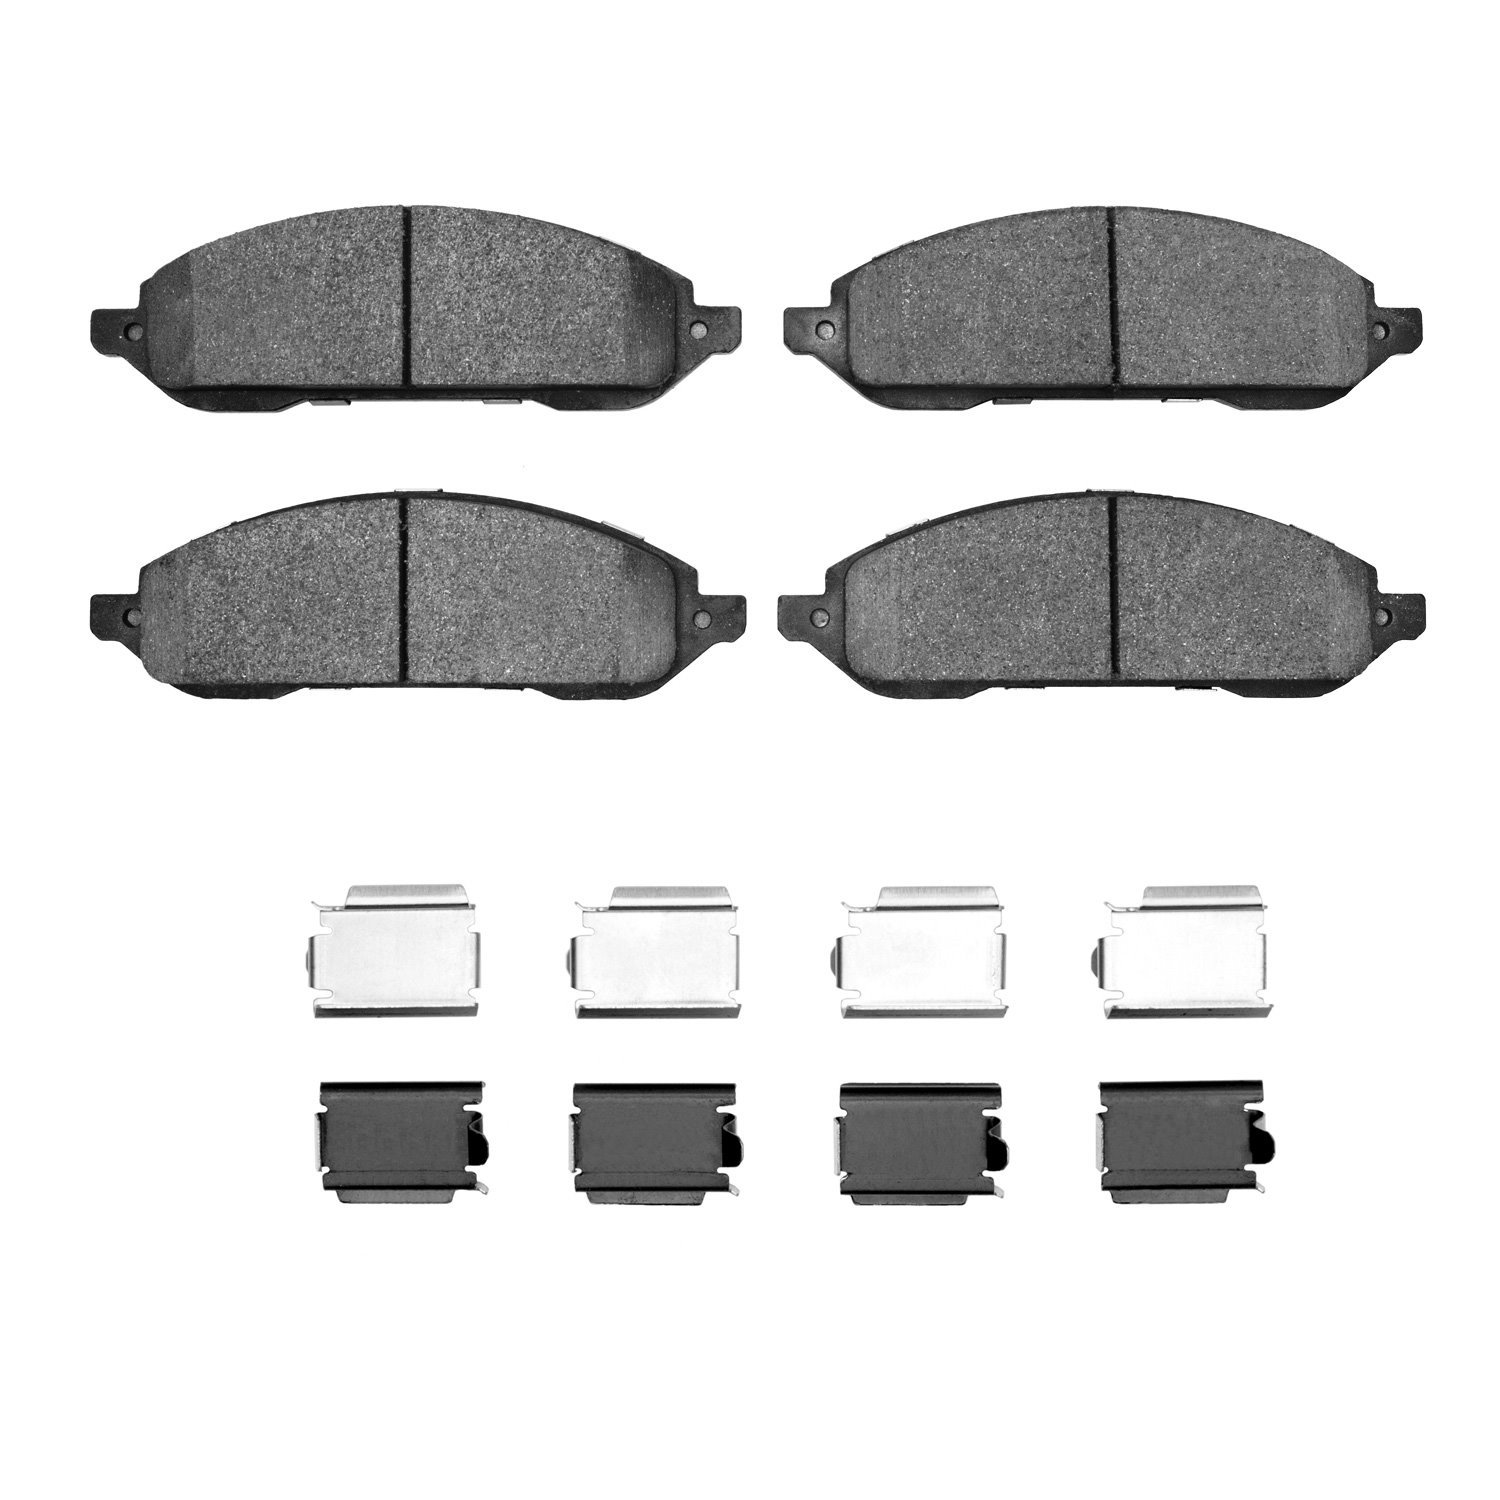 1551-1022-01 5000 Advanced Ceramic Brake Pads & Hardware Kit, 2004-2007 Ford/Lincoln/Mercury/Mazda, Position: Front